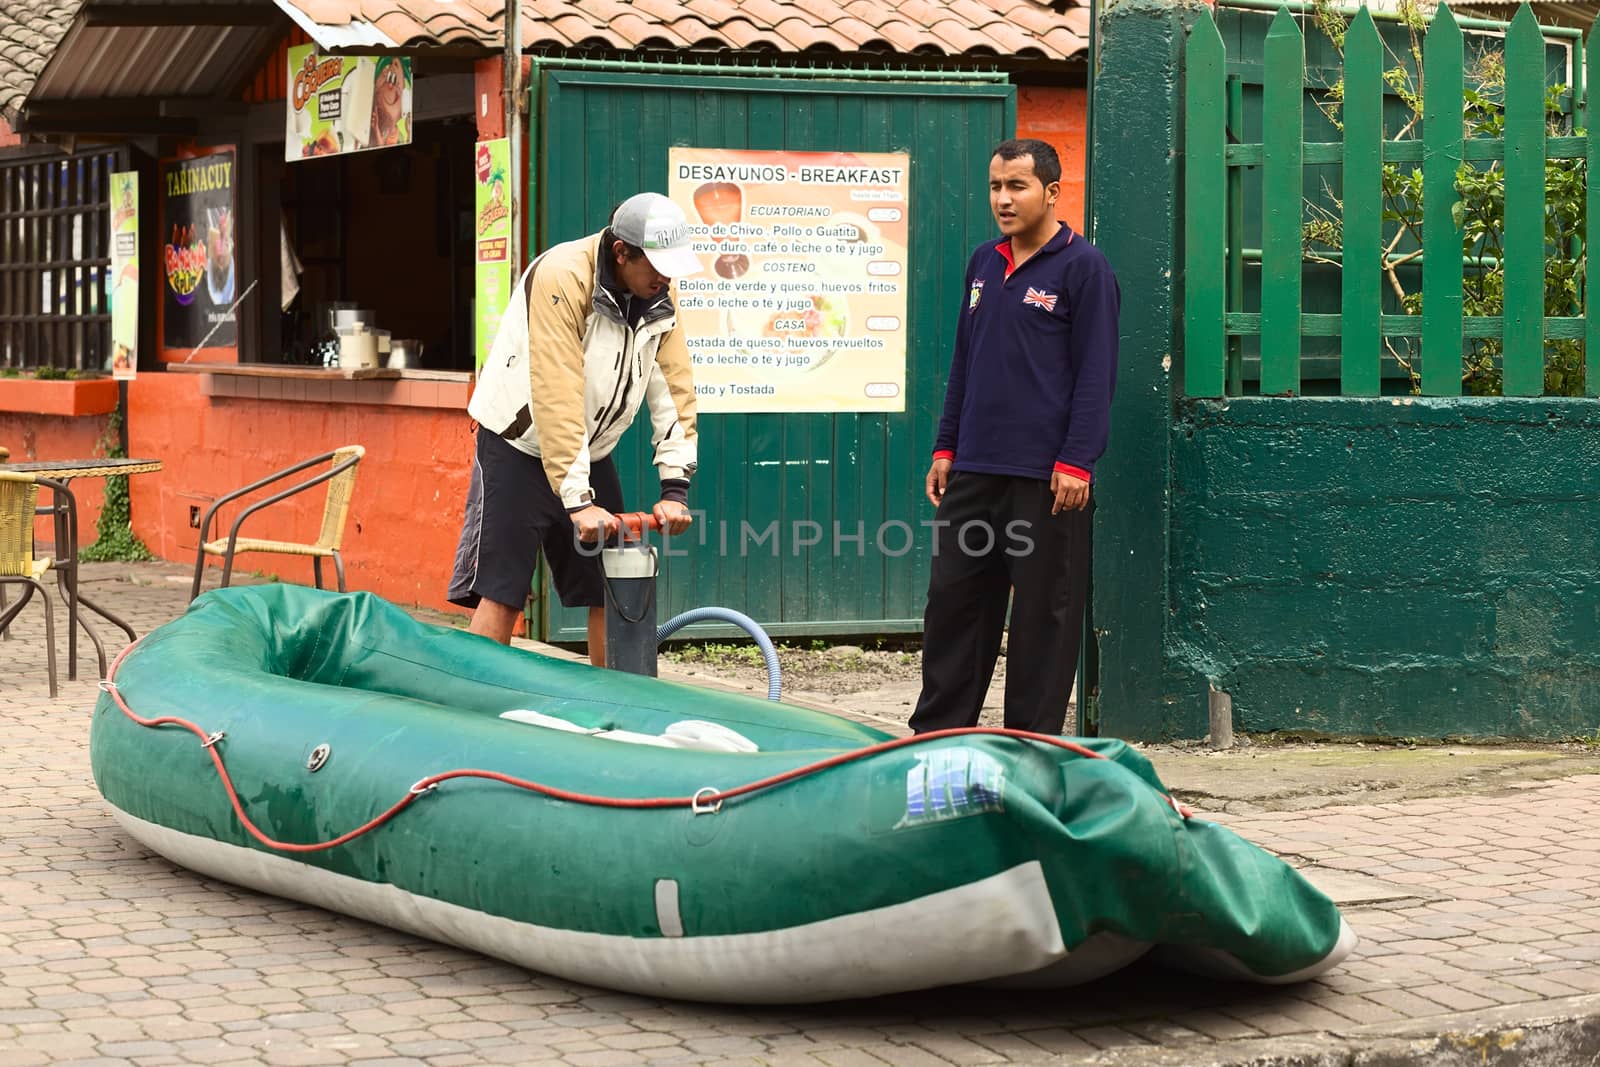 Inflating a Boat in Banos, Ecuador by ildi